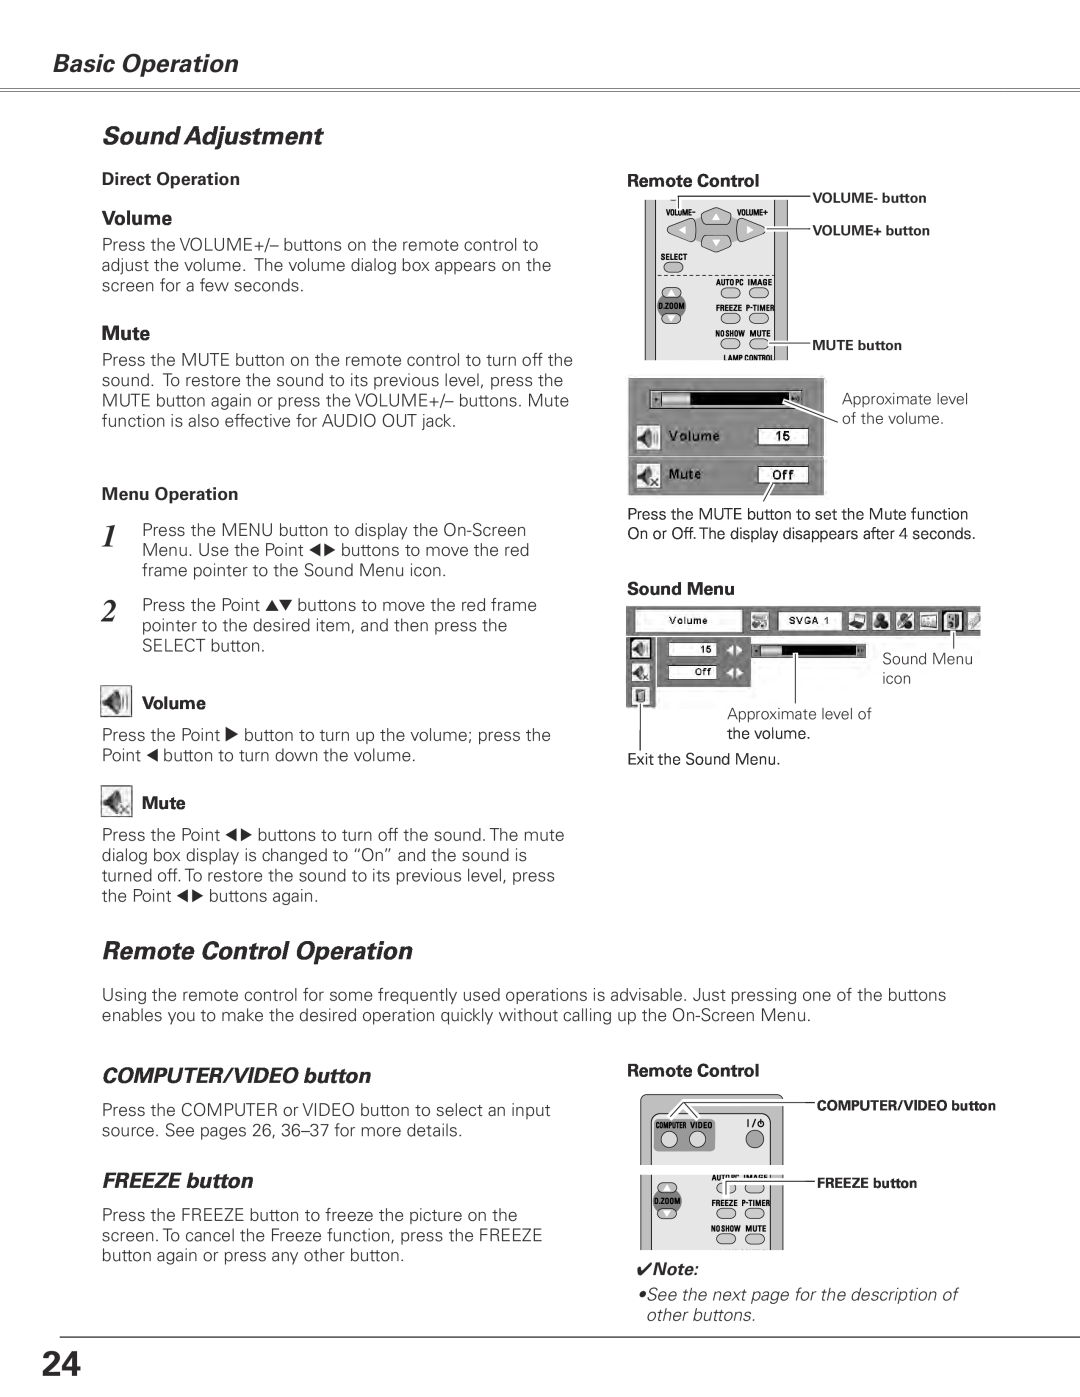 Sanyo PLC-XE50 Sound Adjustment, Remote Control Operation, COMPUTER/VIDEO button, FREEZE button, Basic Operation, Volume 